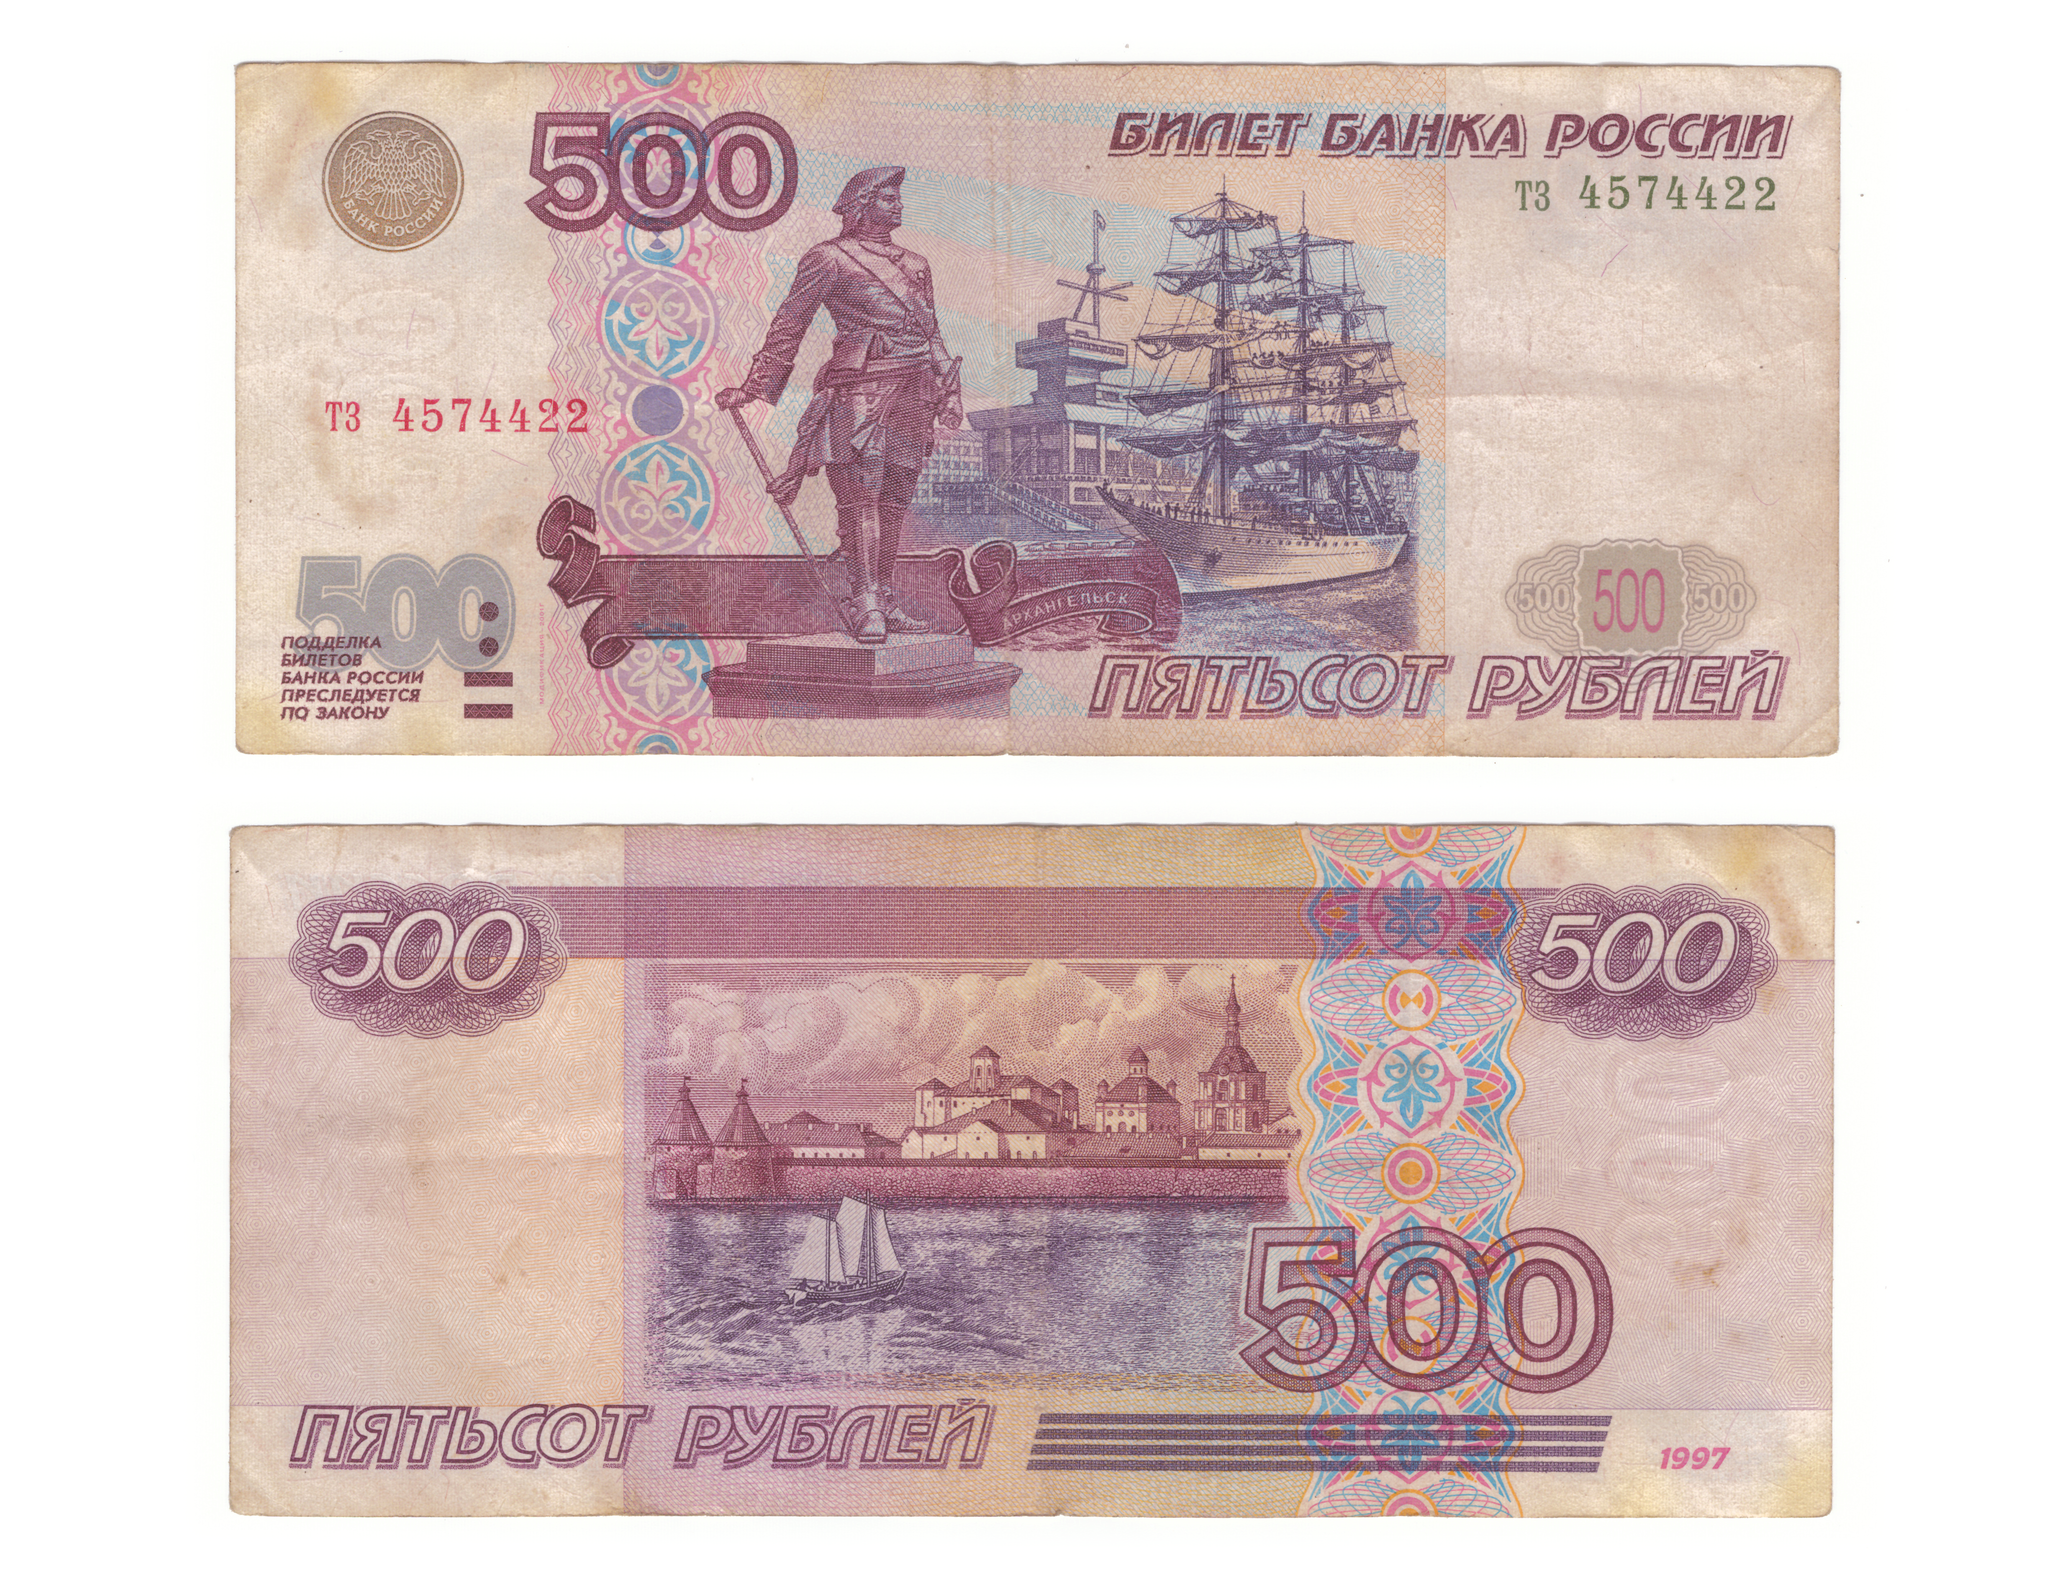 500 рублей продажа. 500 000 Рублей 1995. Купюра 500 рублей 1995. Купюра 500 000 рублей 1995. Купюра 500000 рублей 1995 года.